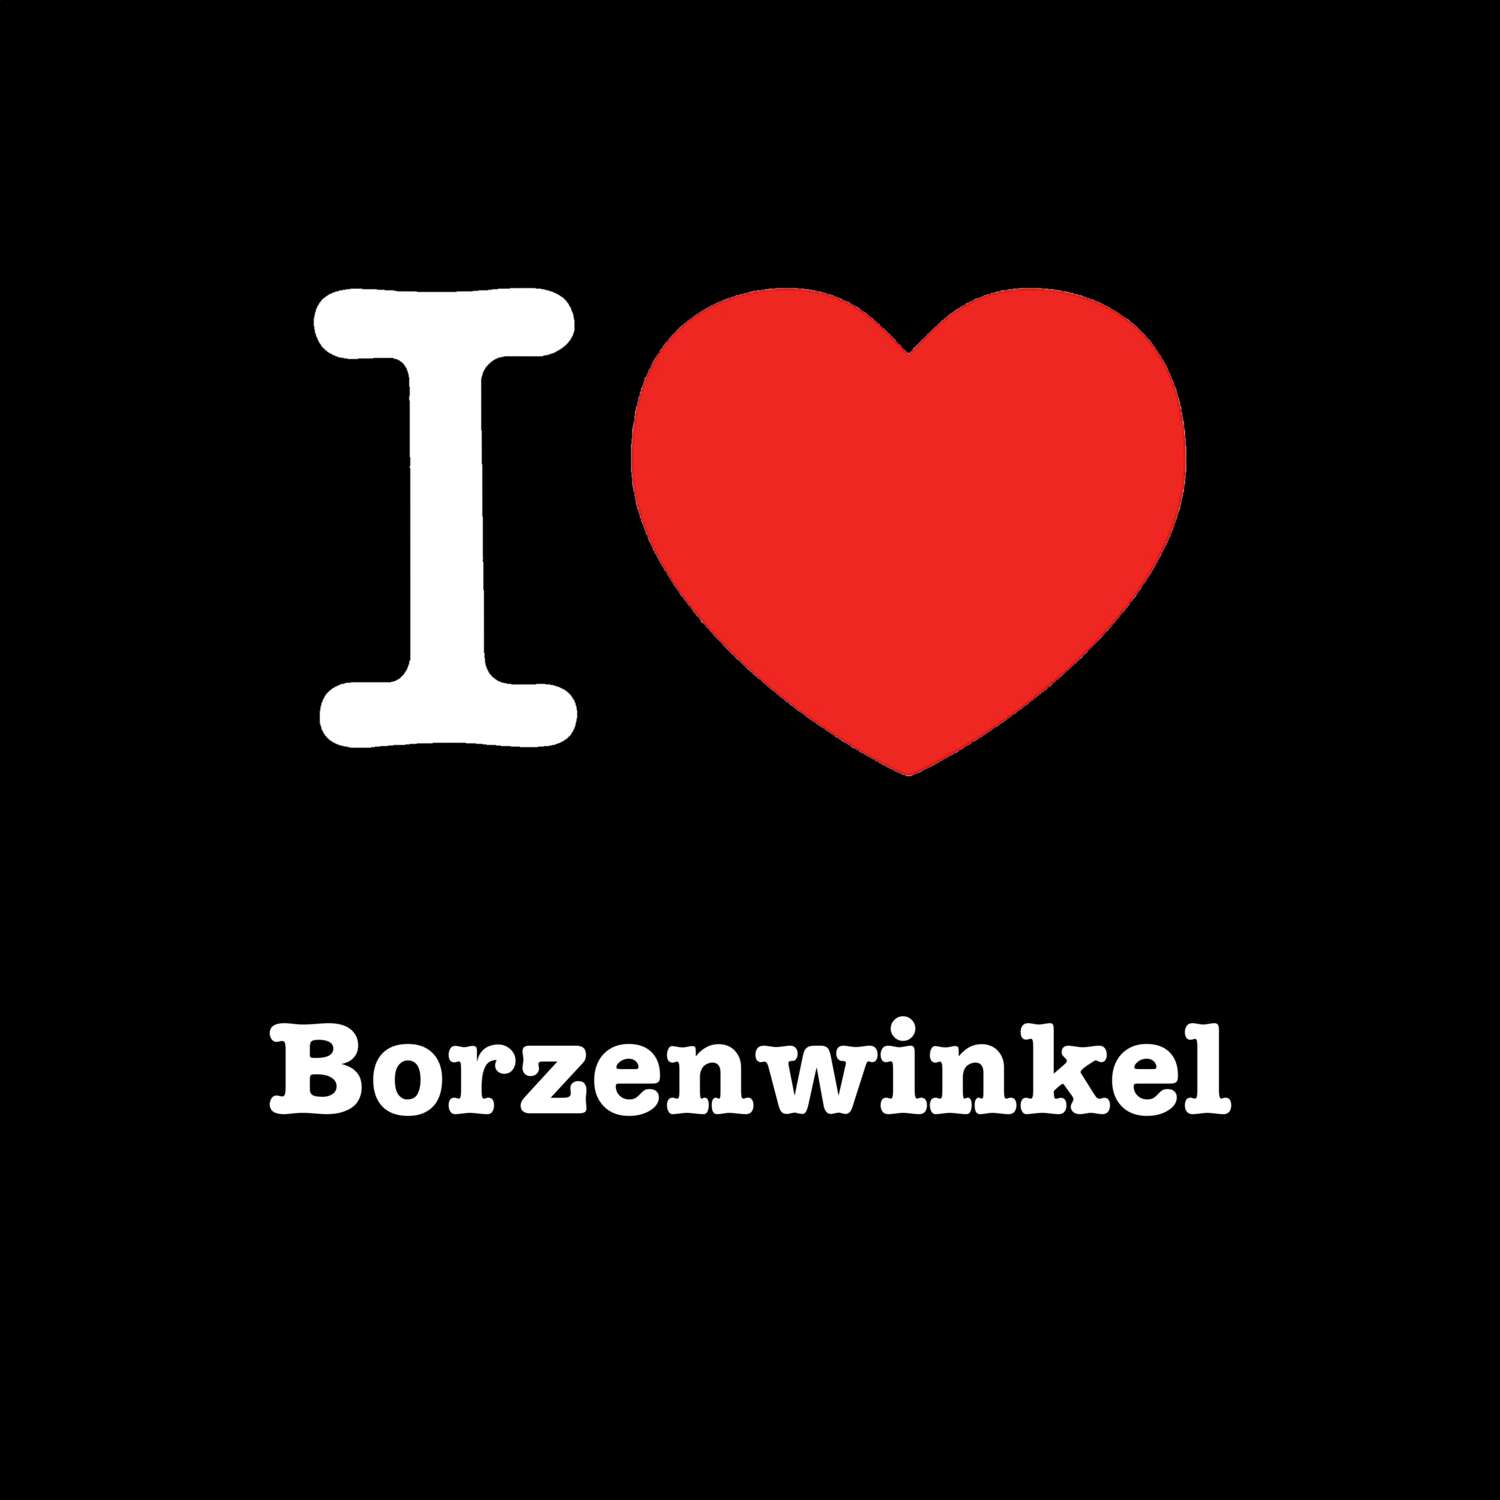 Borzenwinkel T-Shirt »I love«